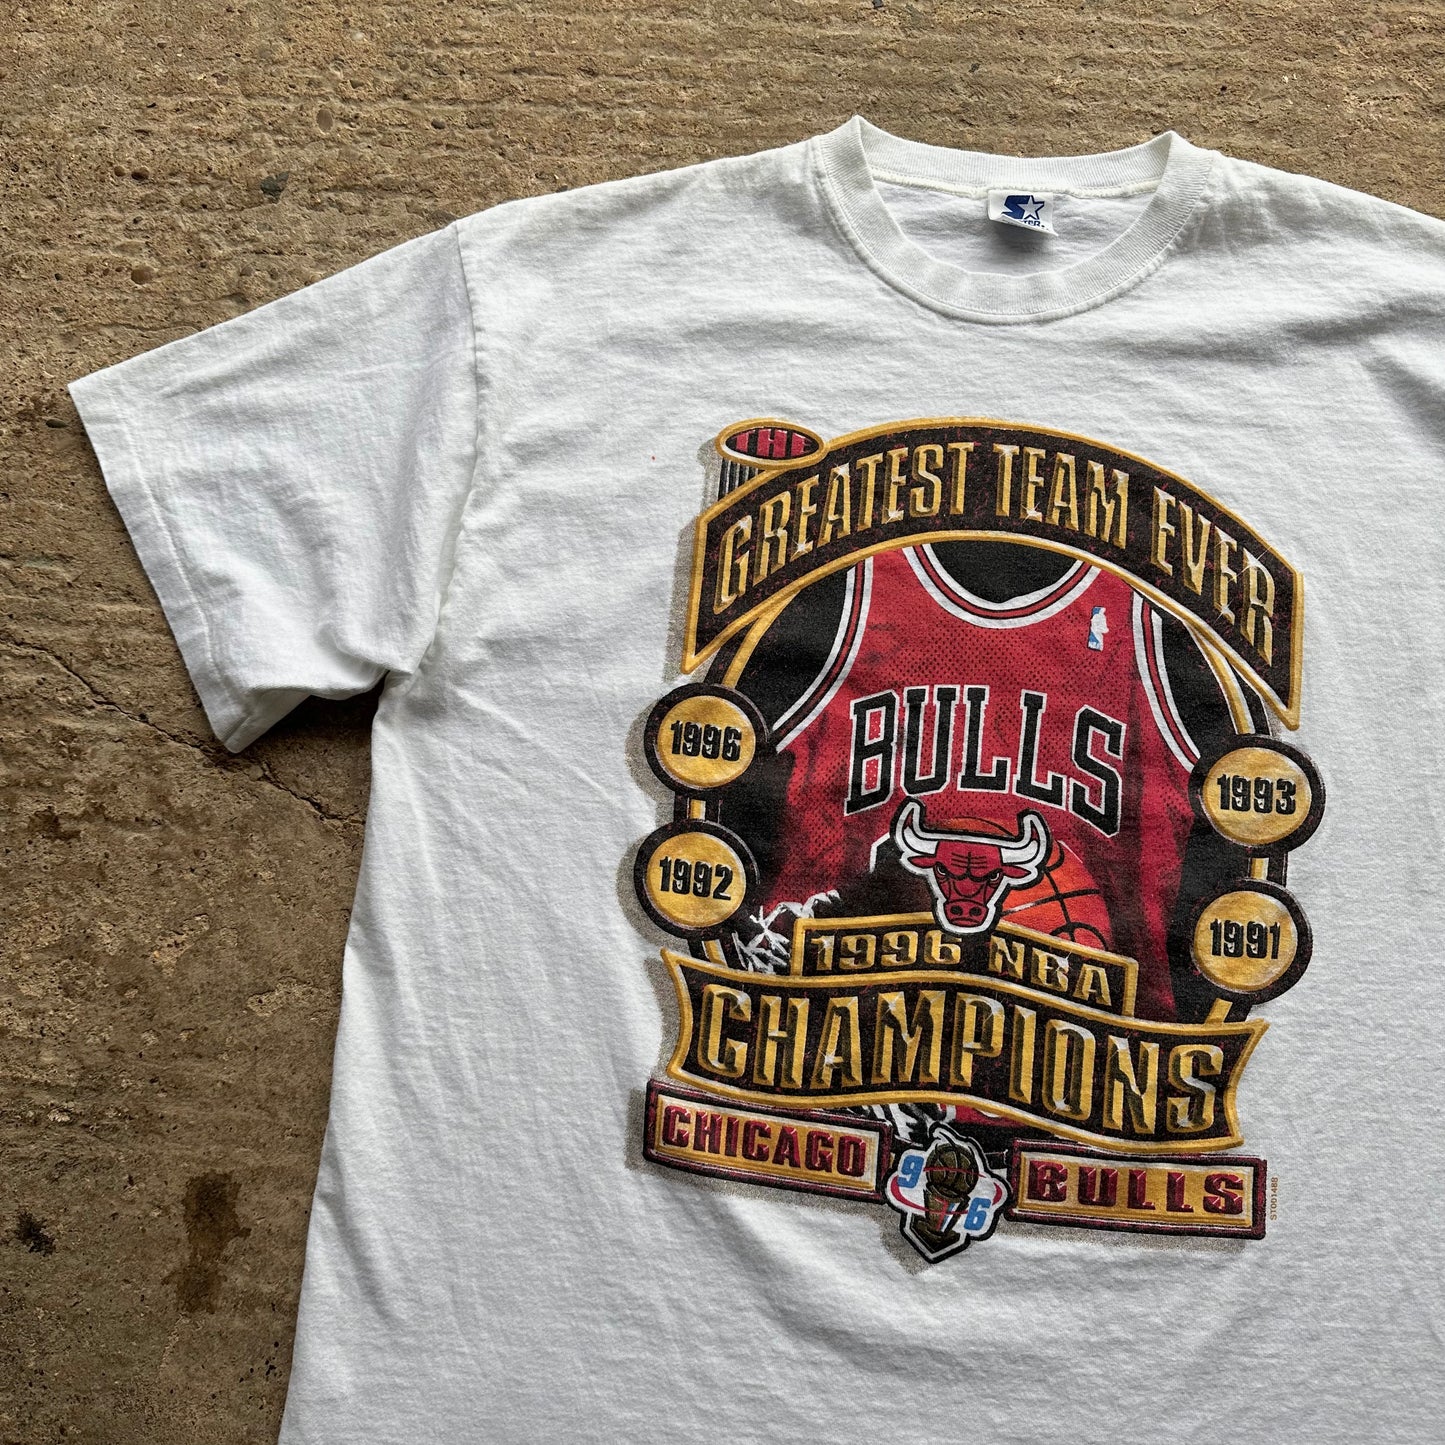 Chicago Bulls - 'Greatest Team Ever' - 1996 - XL